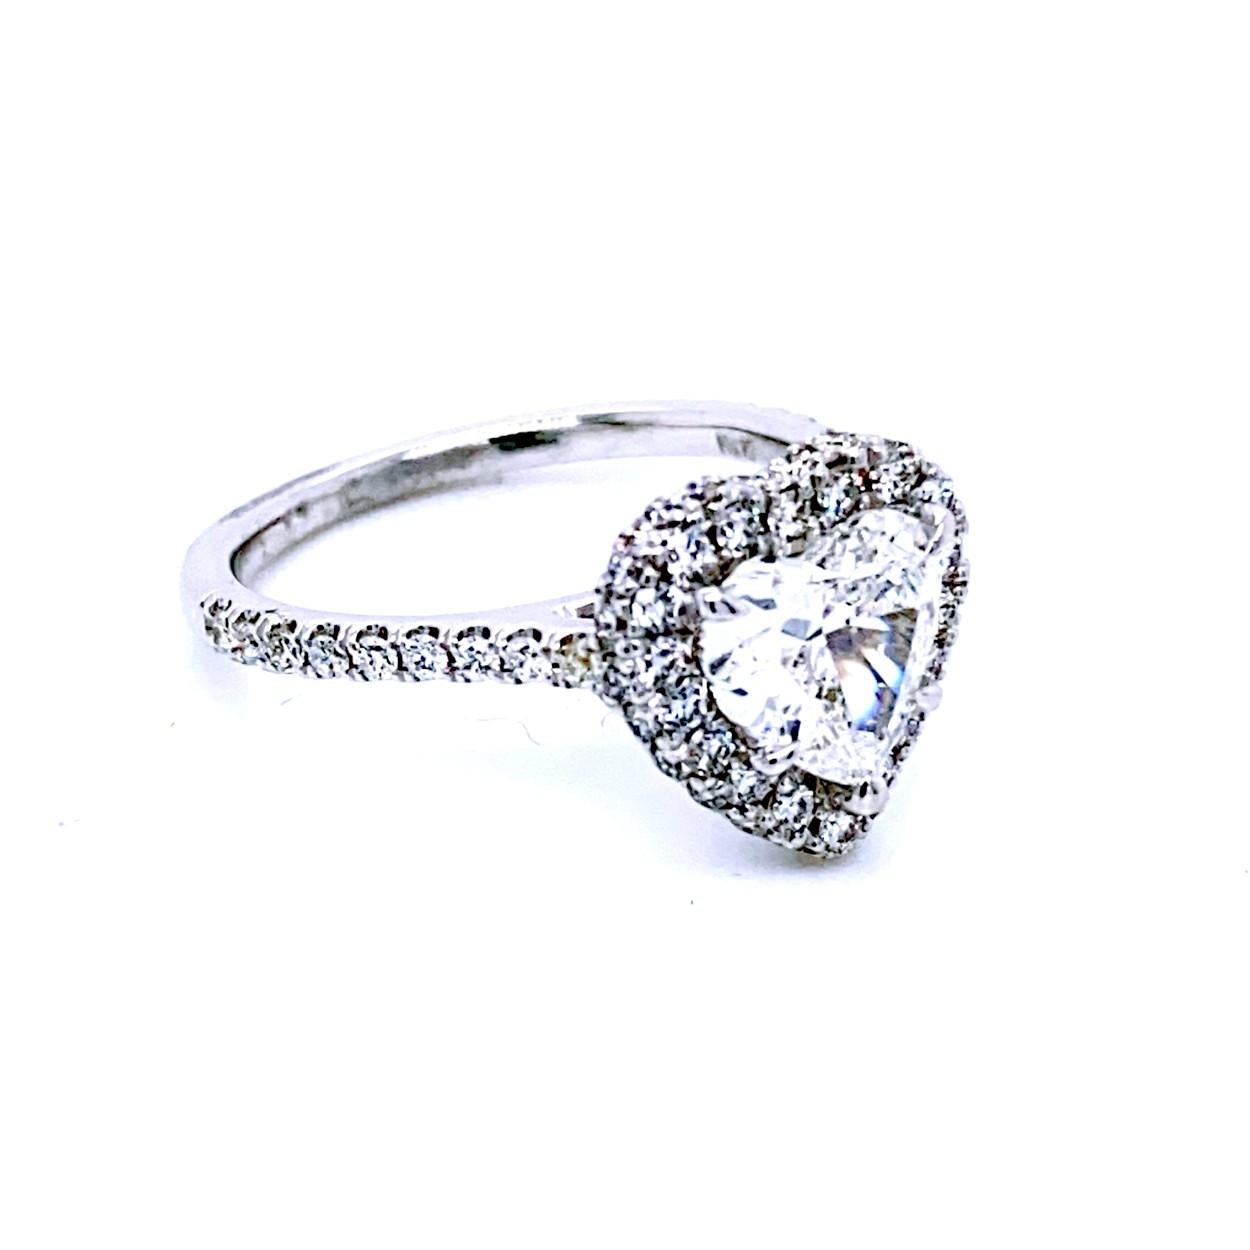 Contemporary GIA 1.19 Carat G/SI1 Heart Shape Diamond 18 Karat Pave Set Ring with Halo